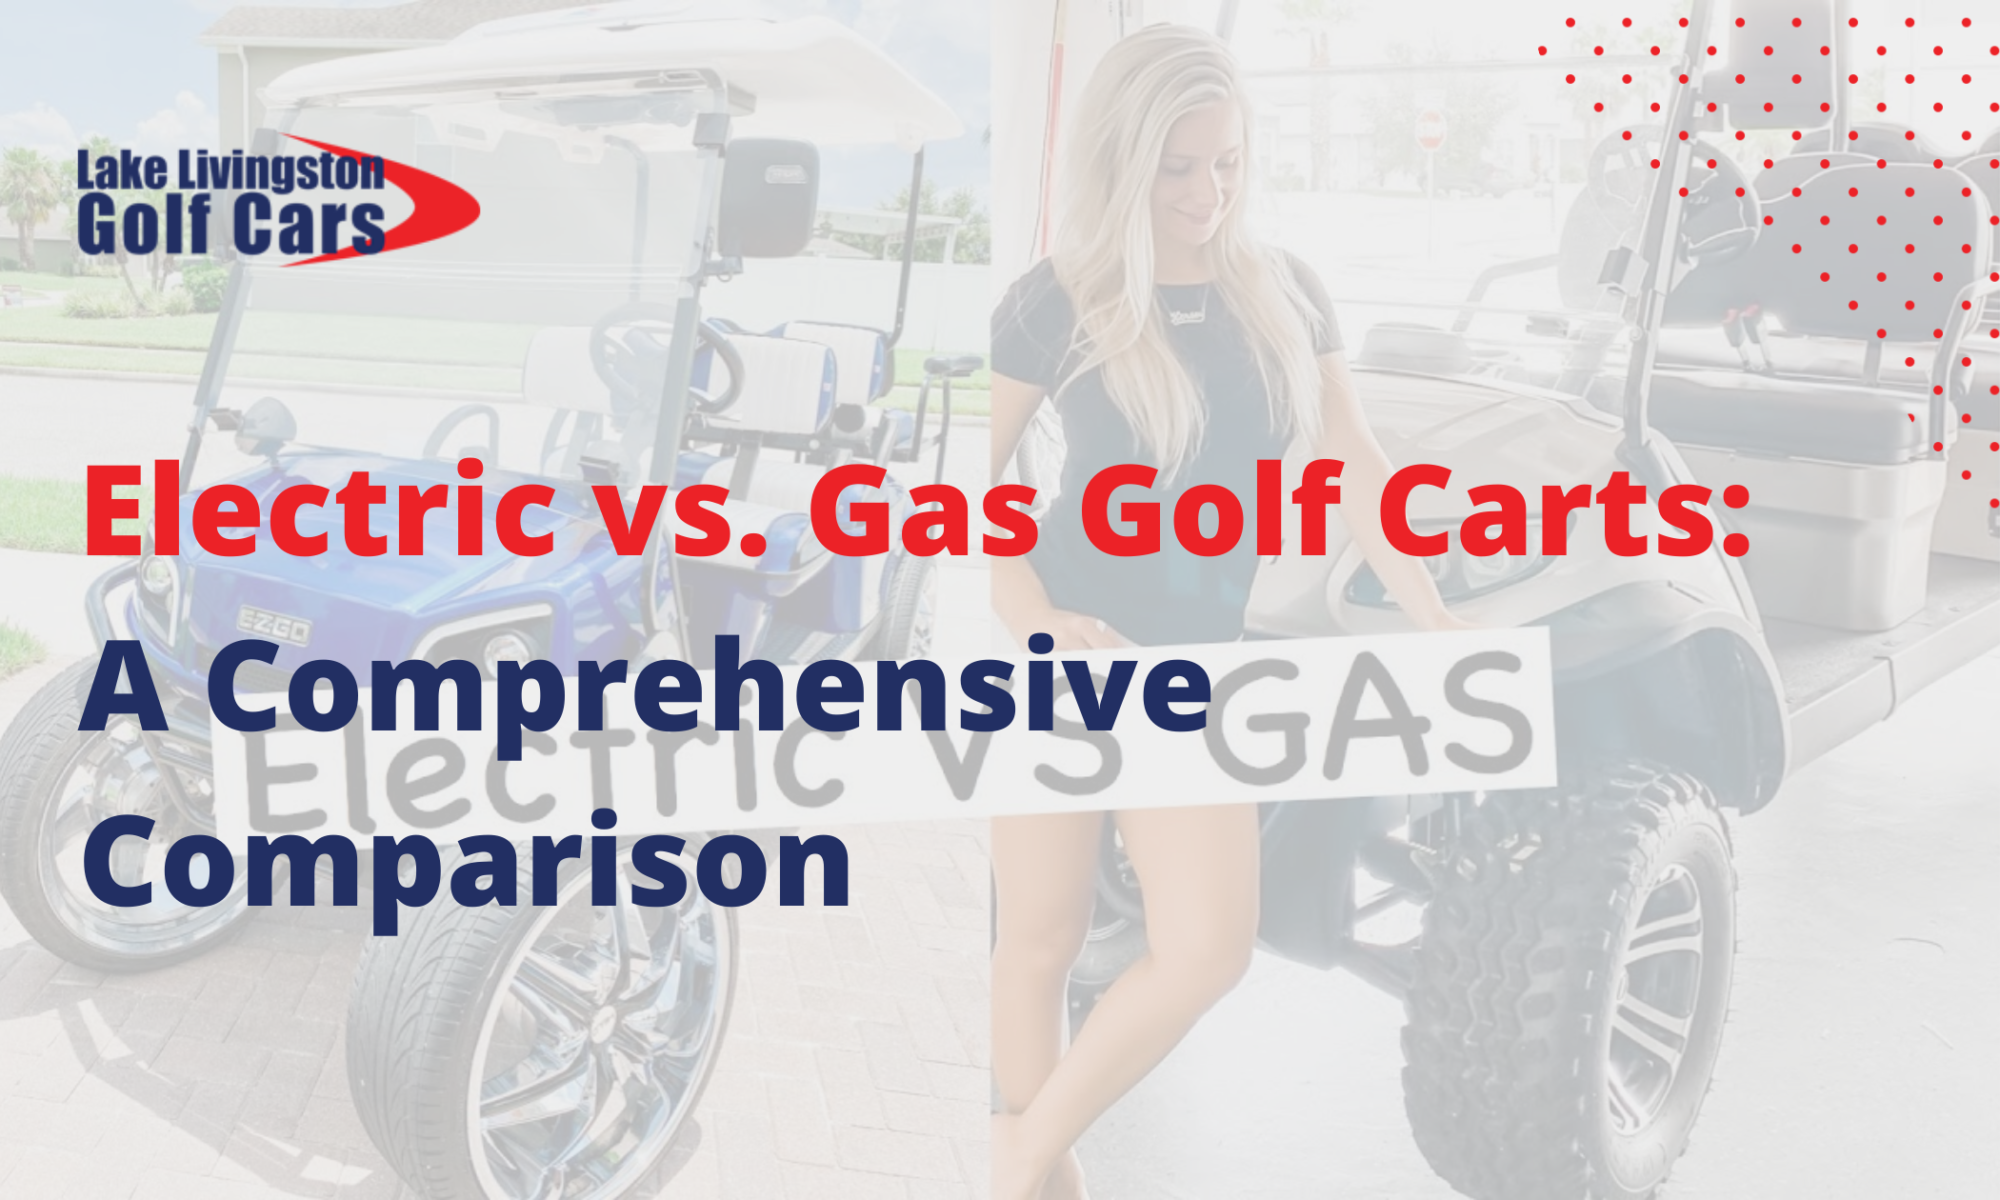 Electric vs. Gas Golf Carts: A Comprehensive Comparison